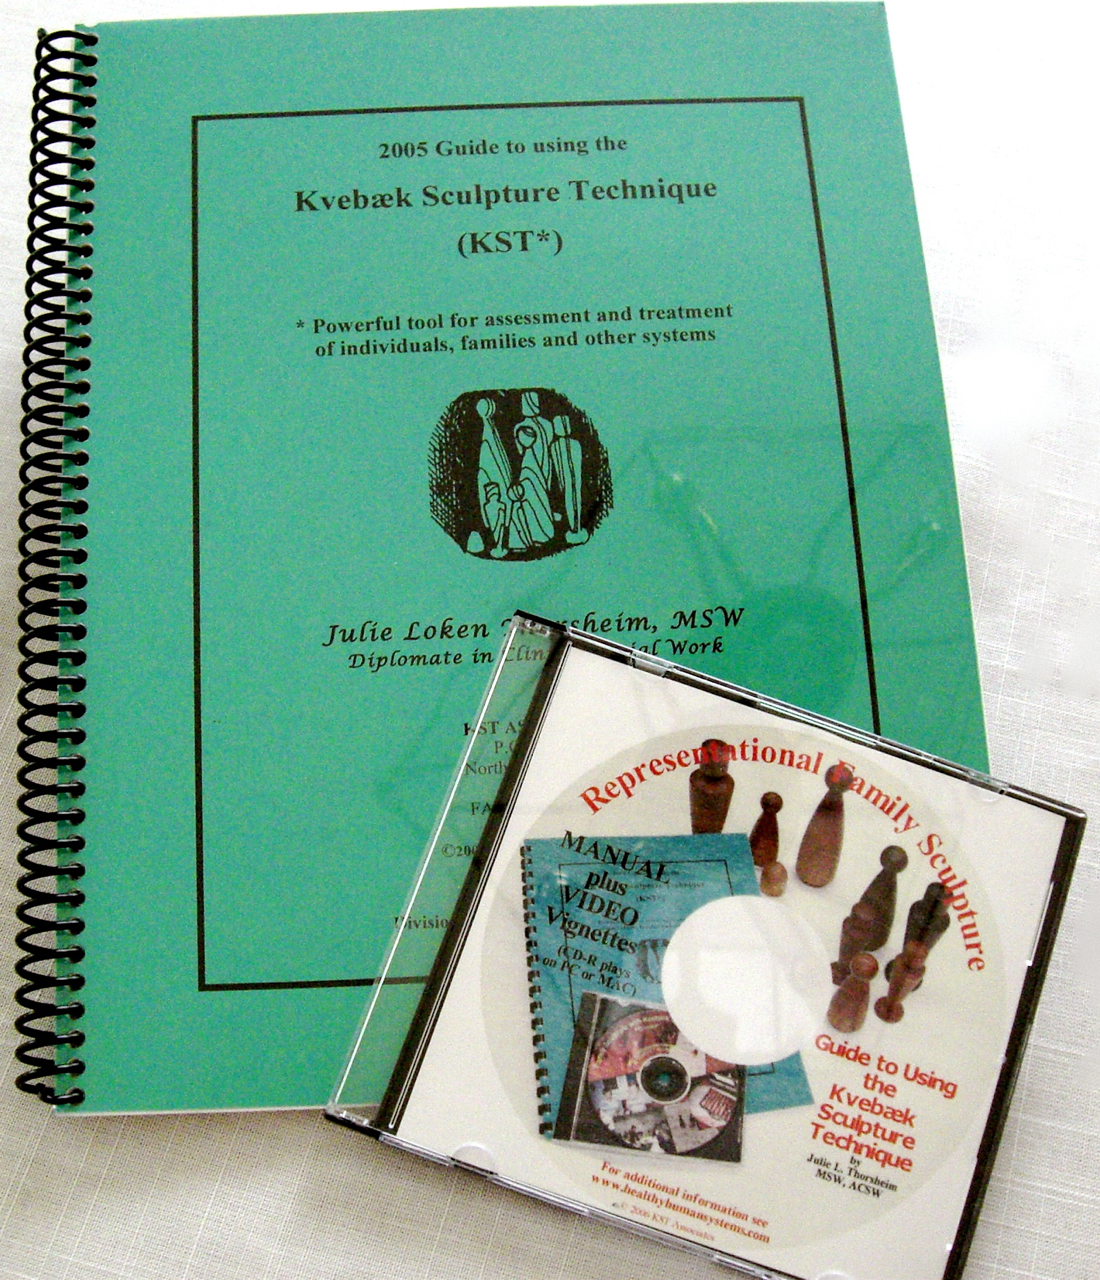 Paper manual and CD